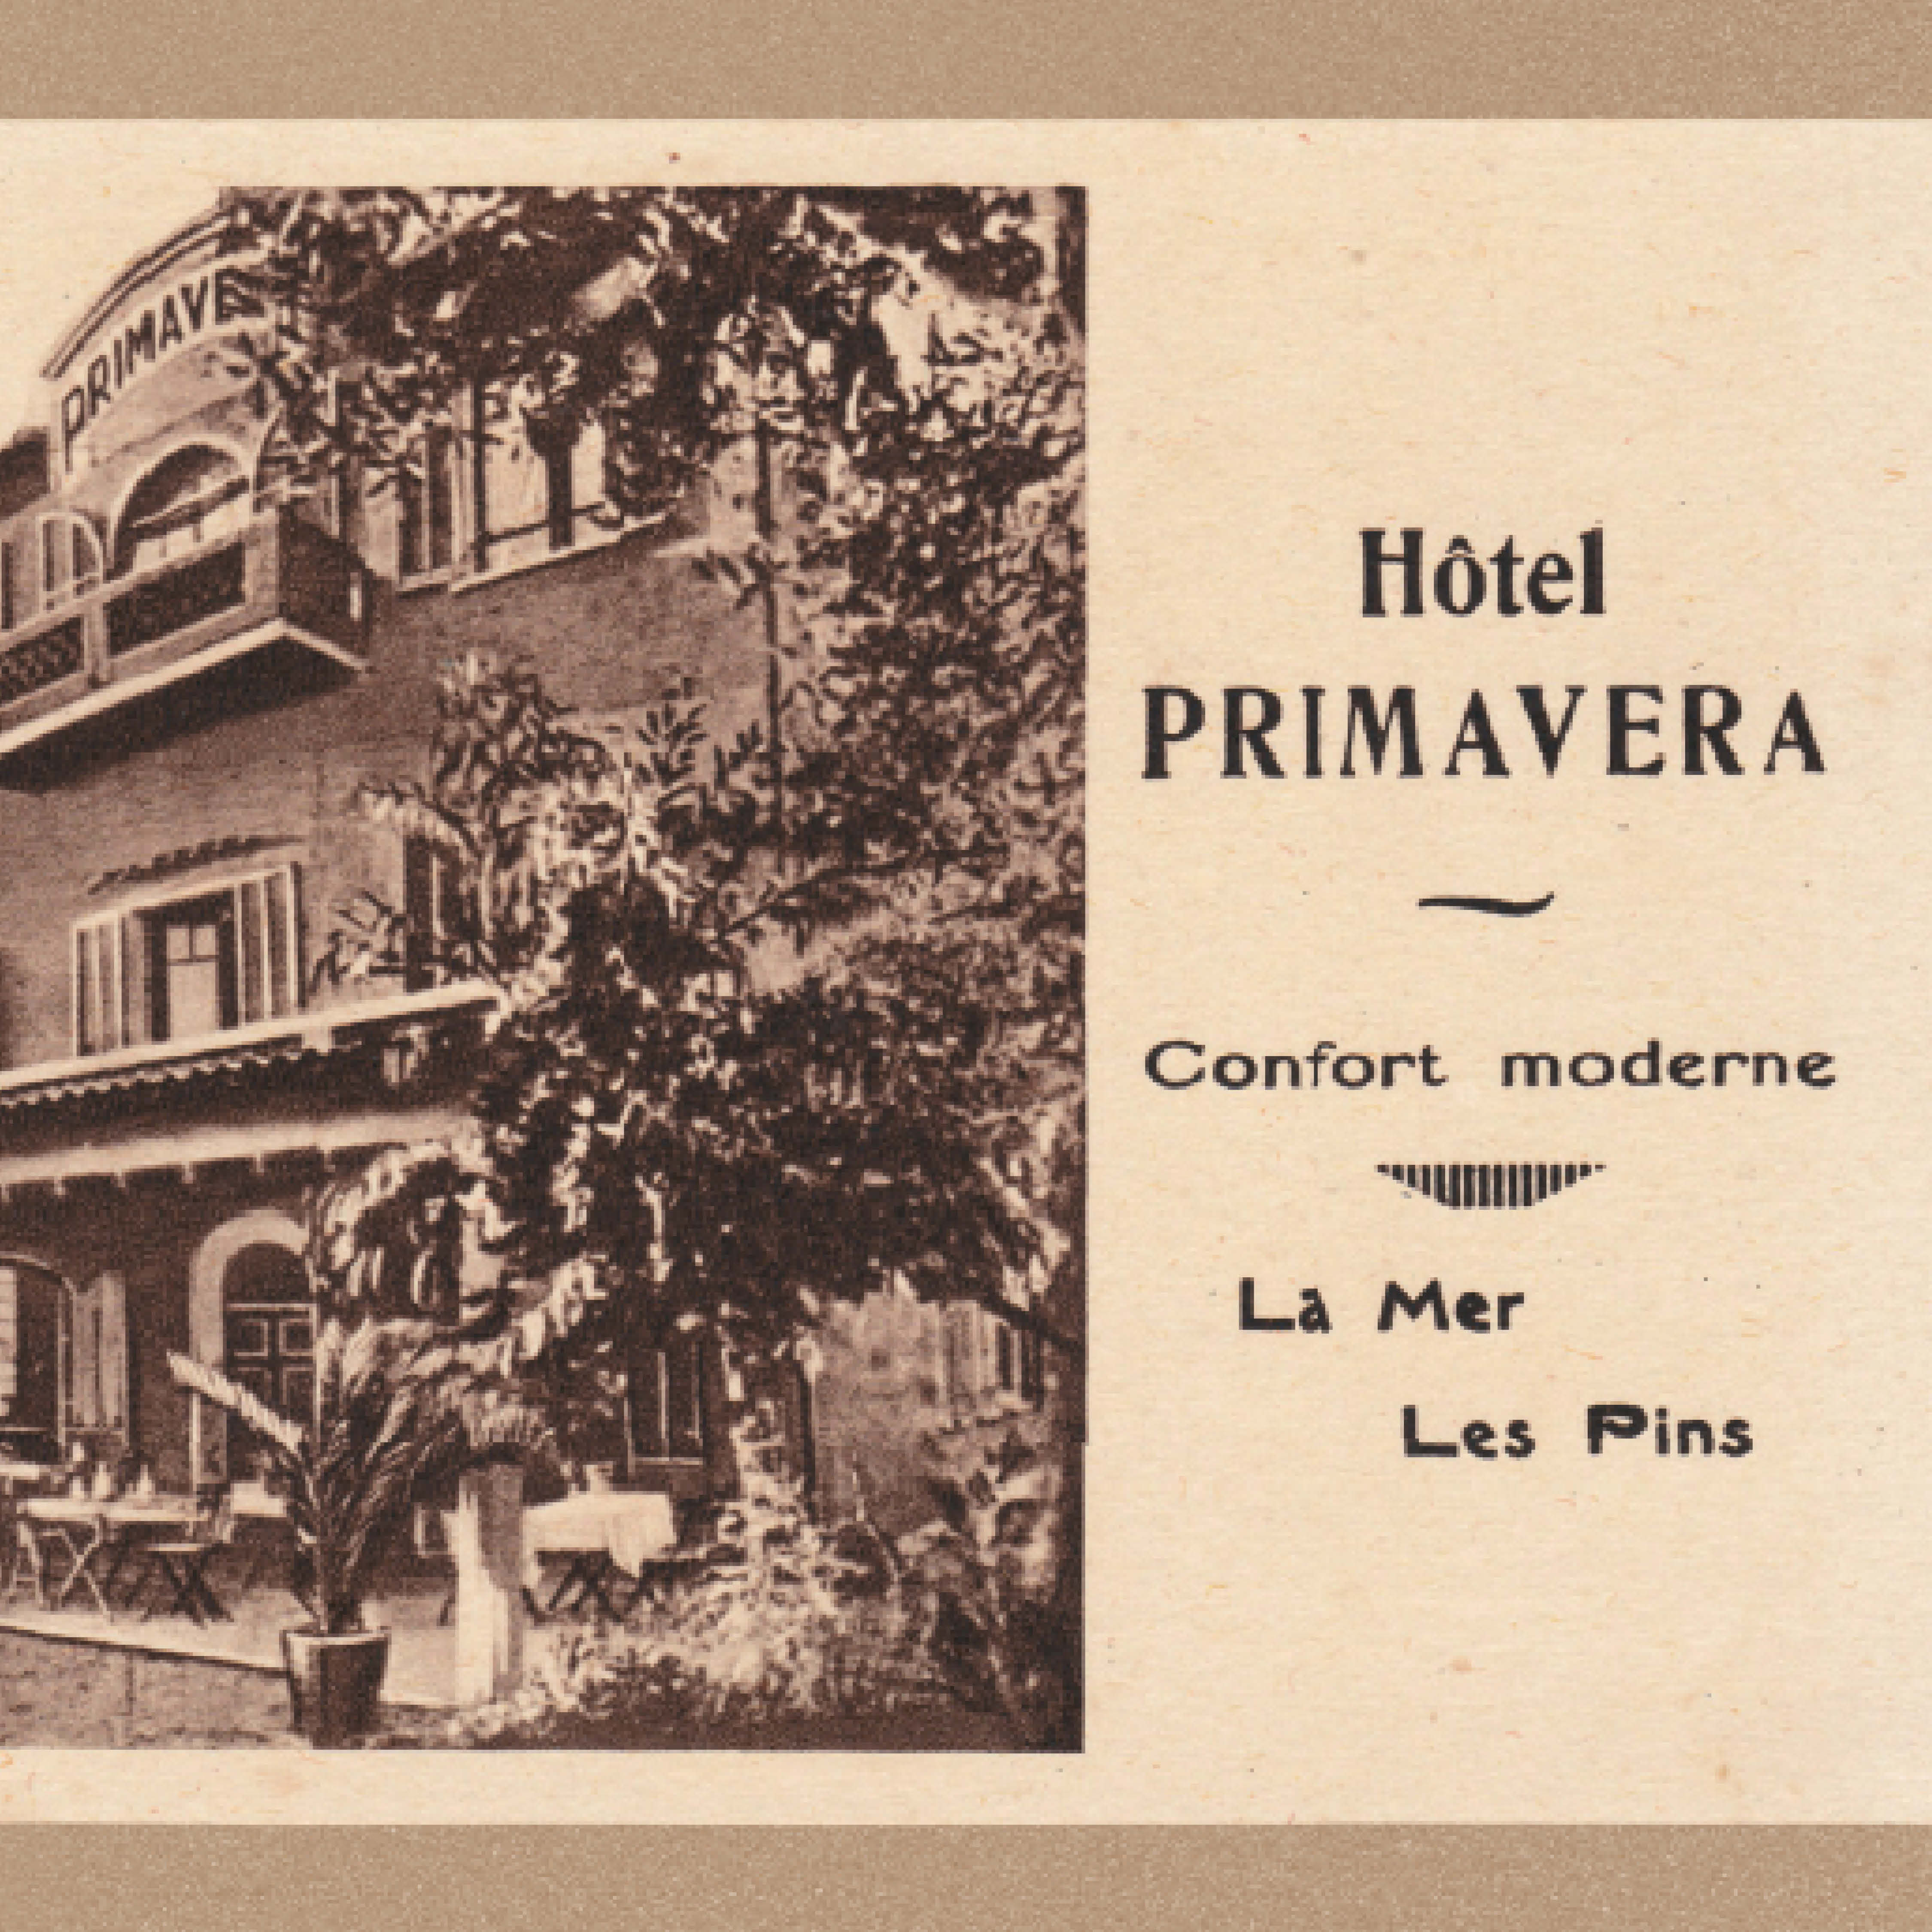 Hôtel Primavera